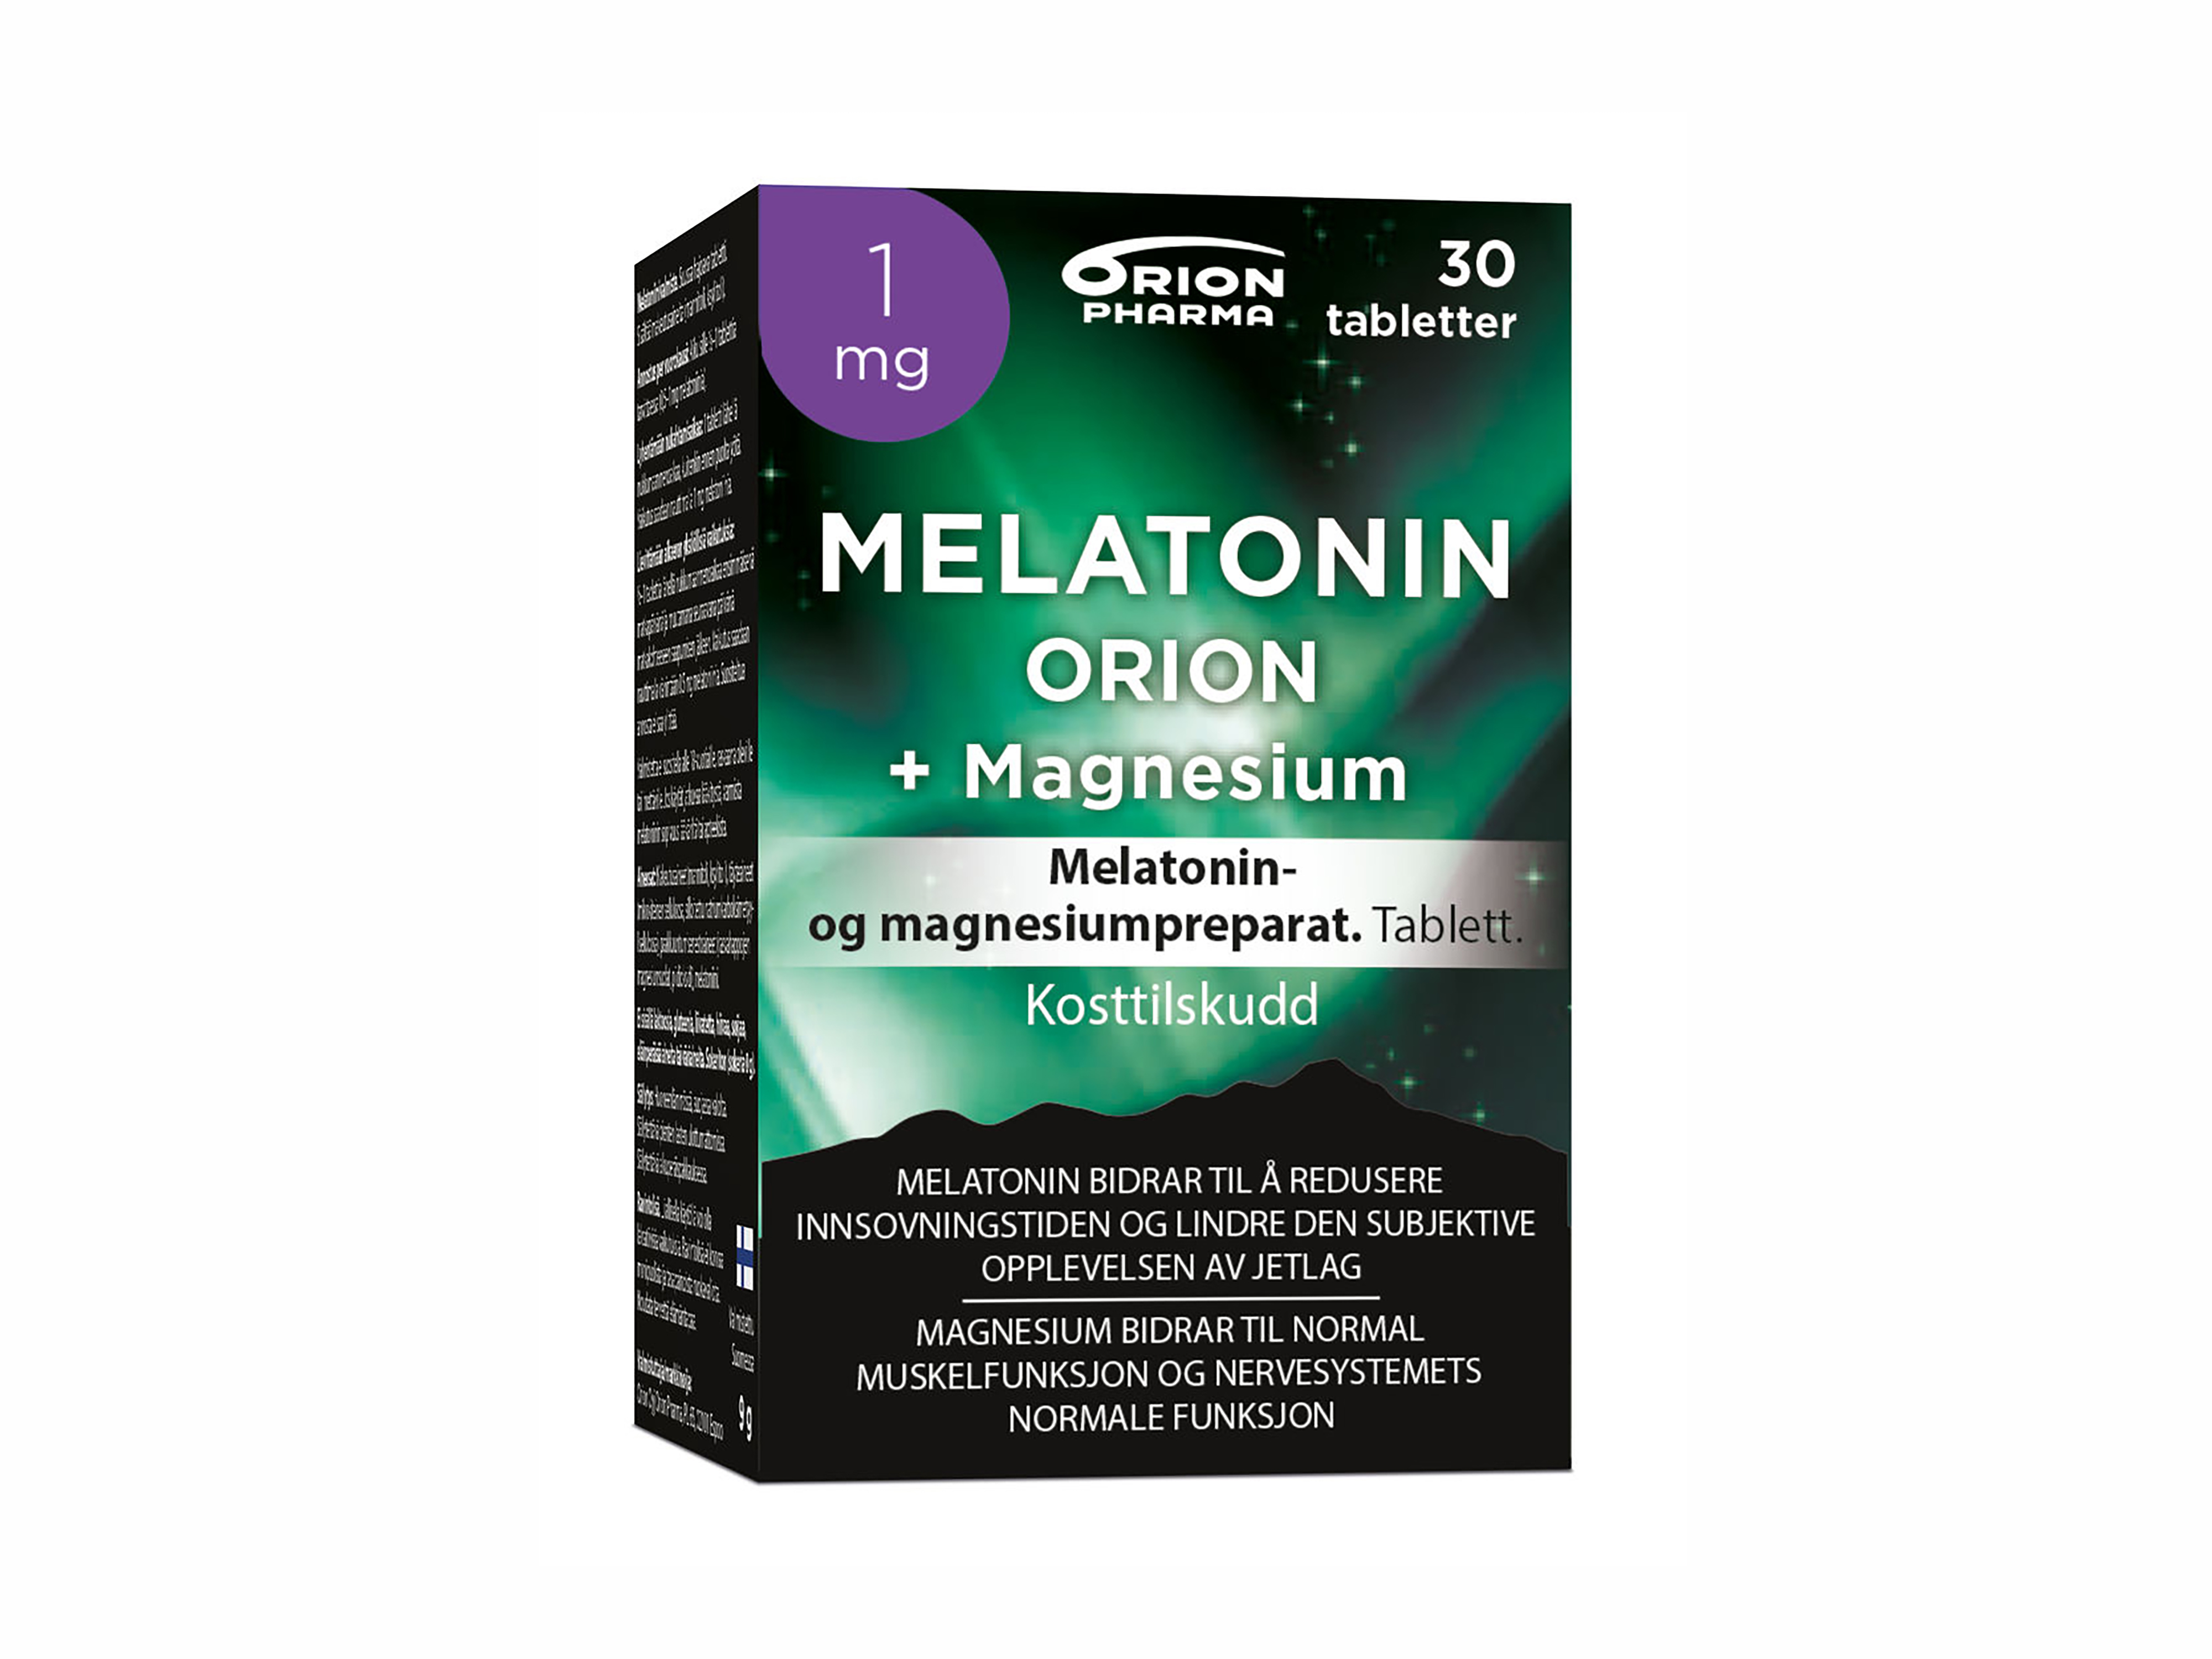 1 mg tablett + Magnesium, 30 stk.